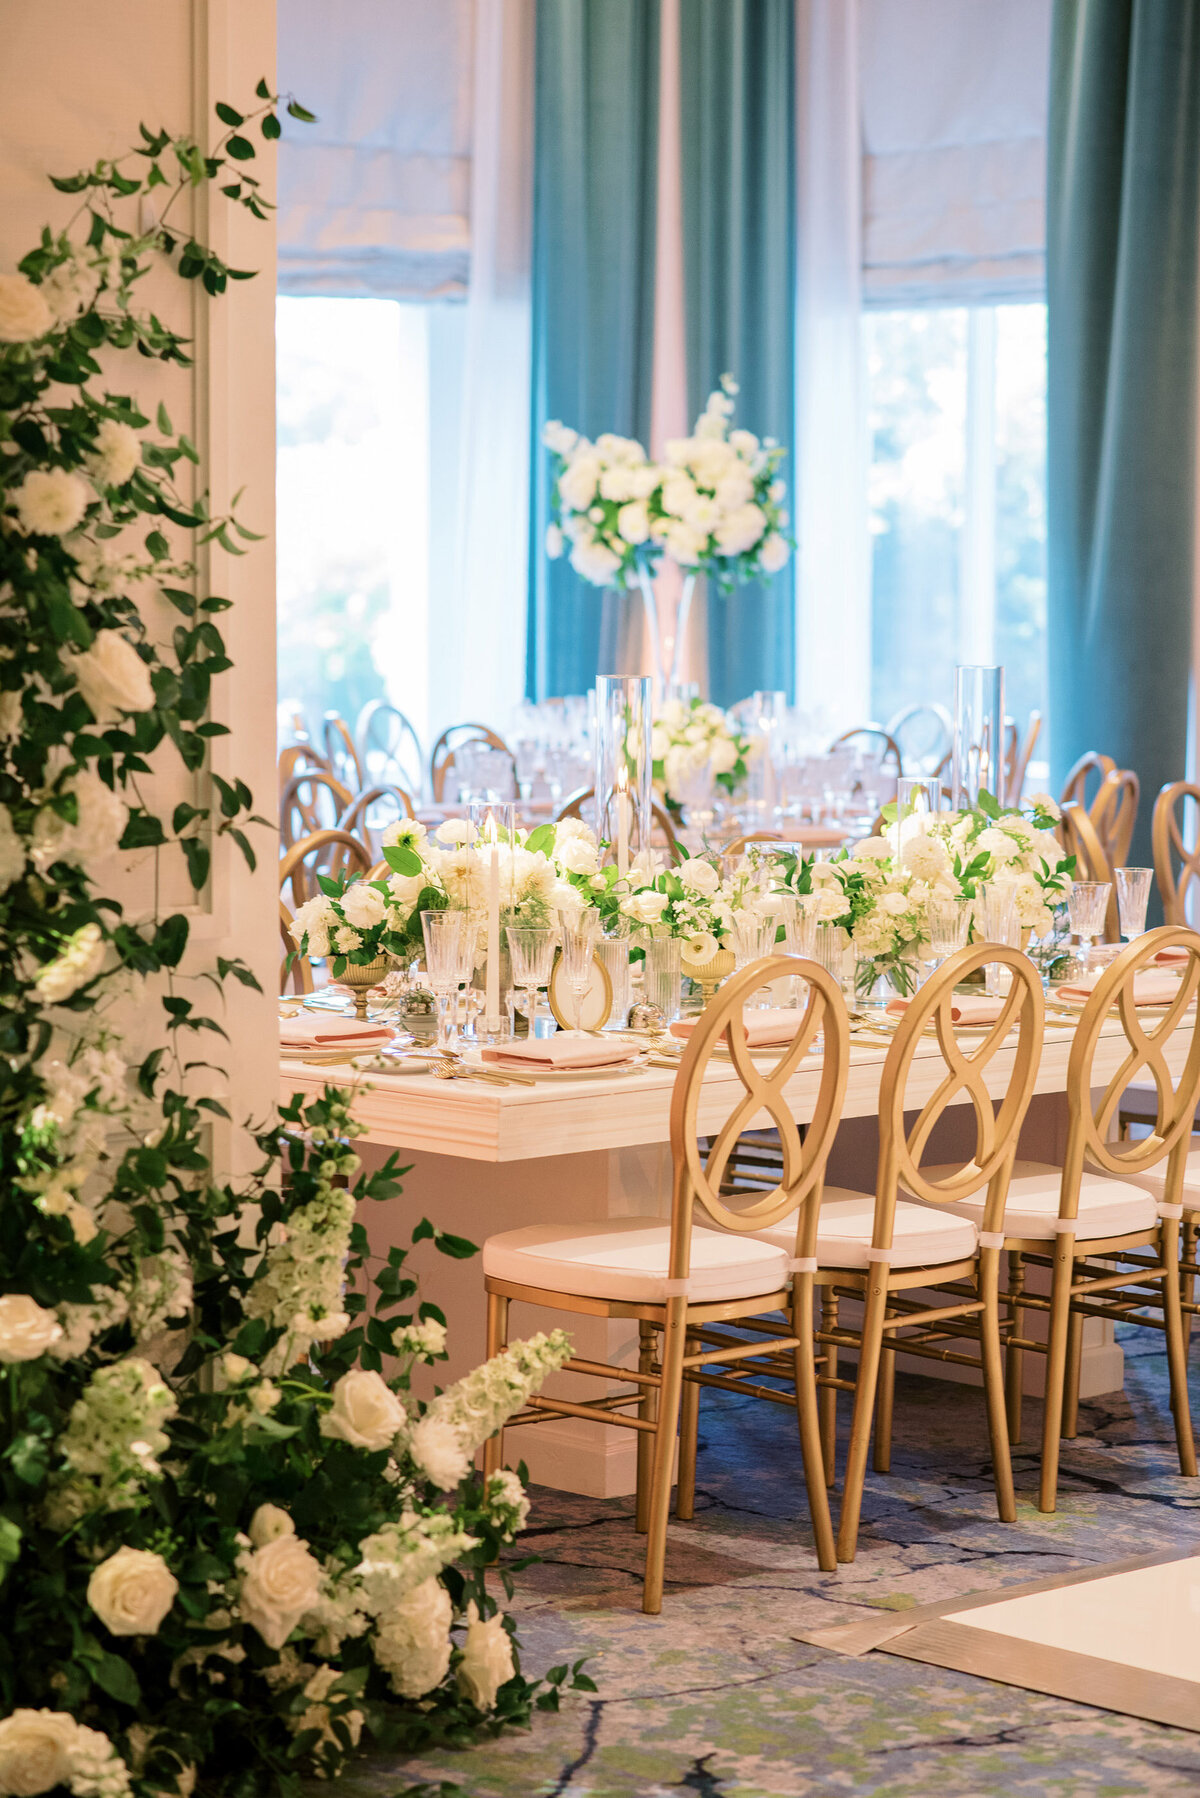 Kate-Murtaugh-Events-Boston-wedding-floral-reception-table